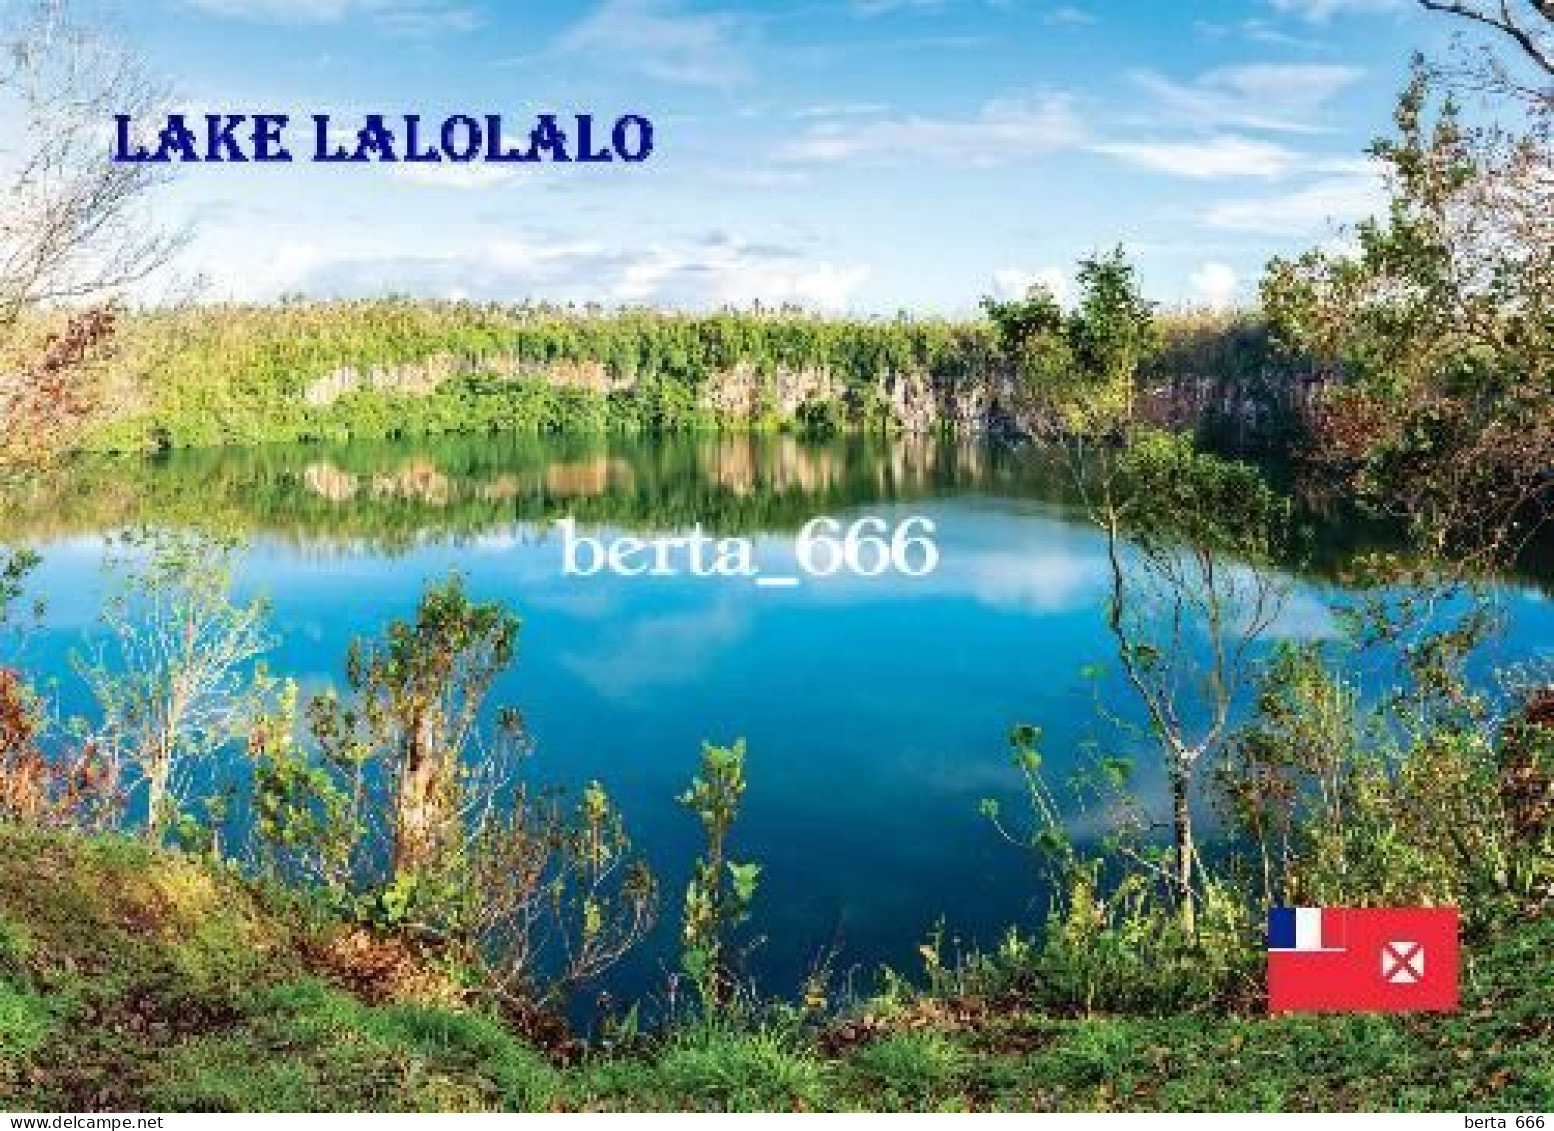 Wallis And Futuna Lake Lalolalo New Postcard - Wallis E Futuna